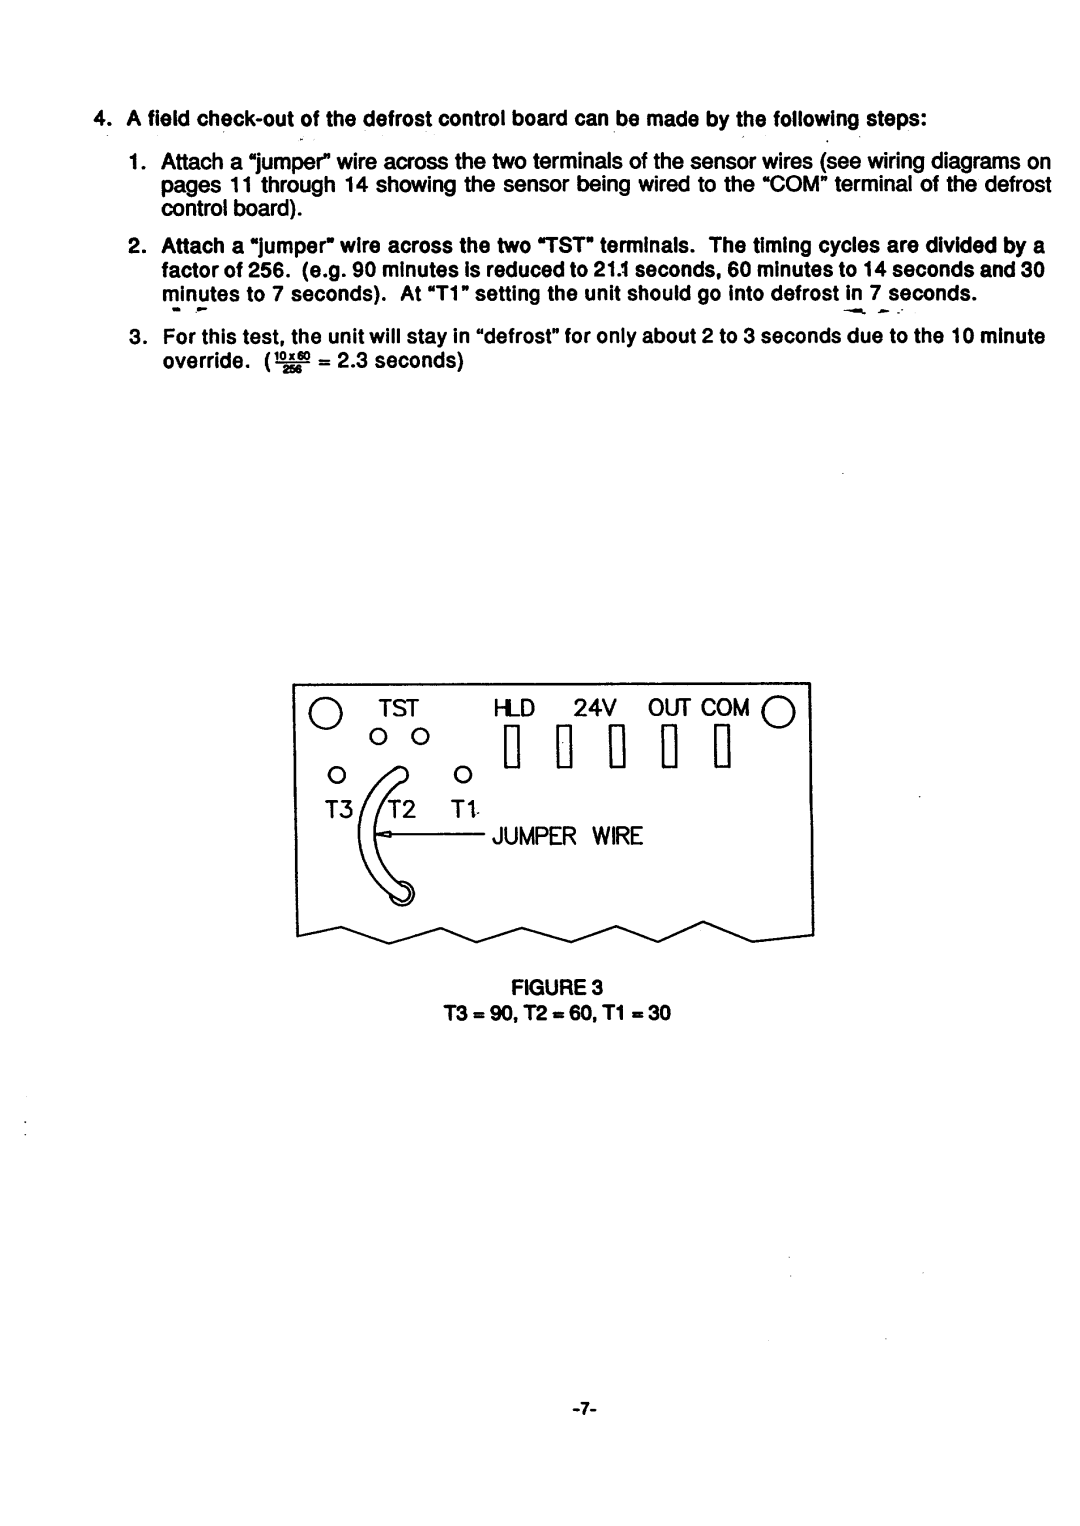 Goetti Air Conditioning Heat Pump manual 24V OUT COM, Jumper Wire, flfl H 